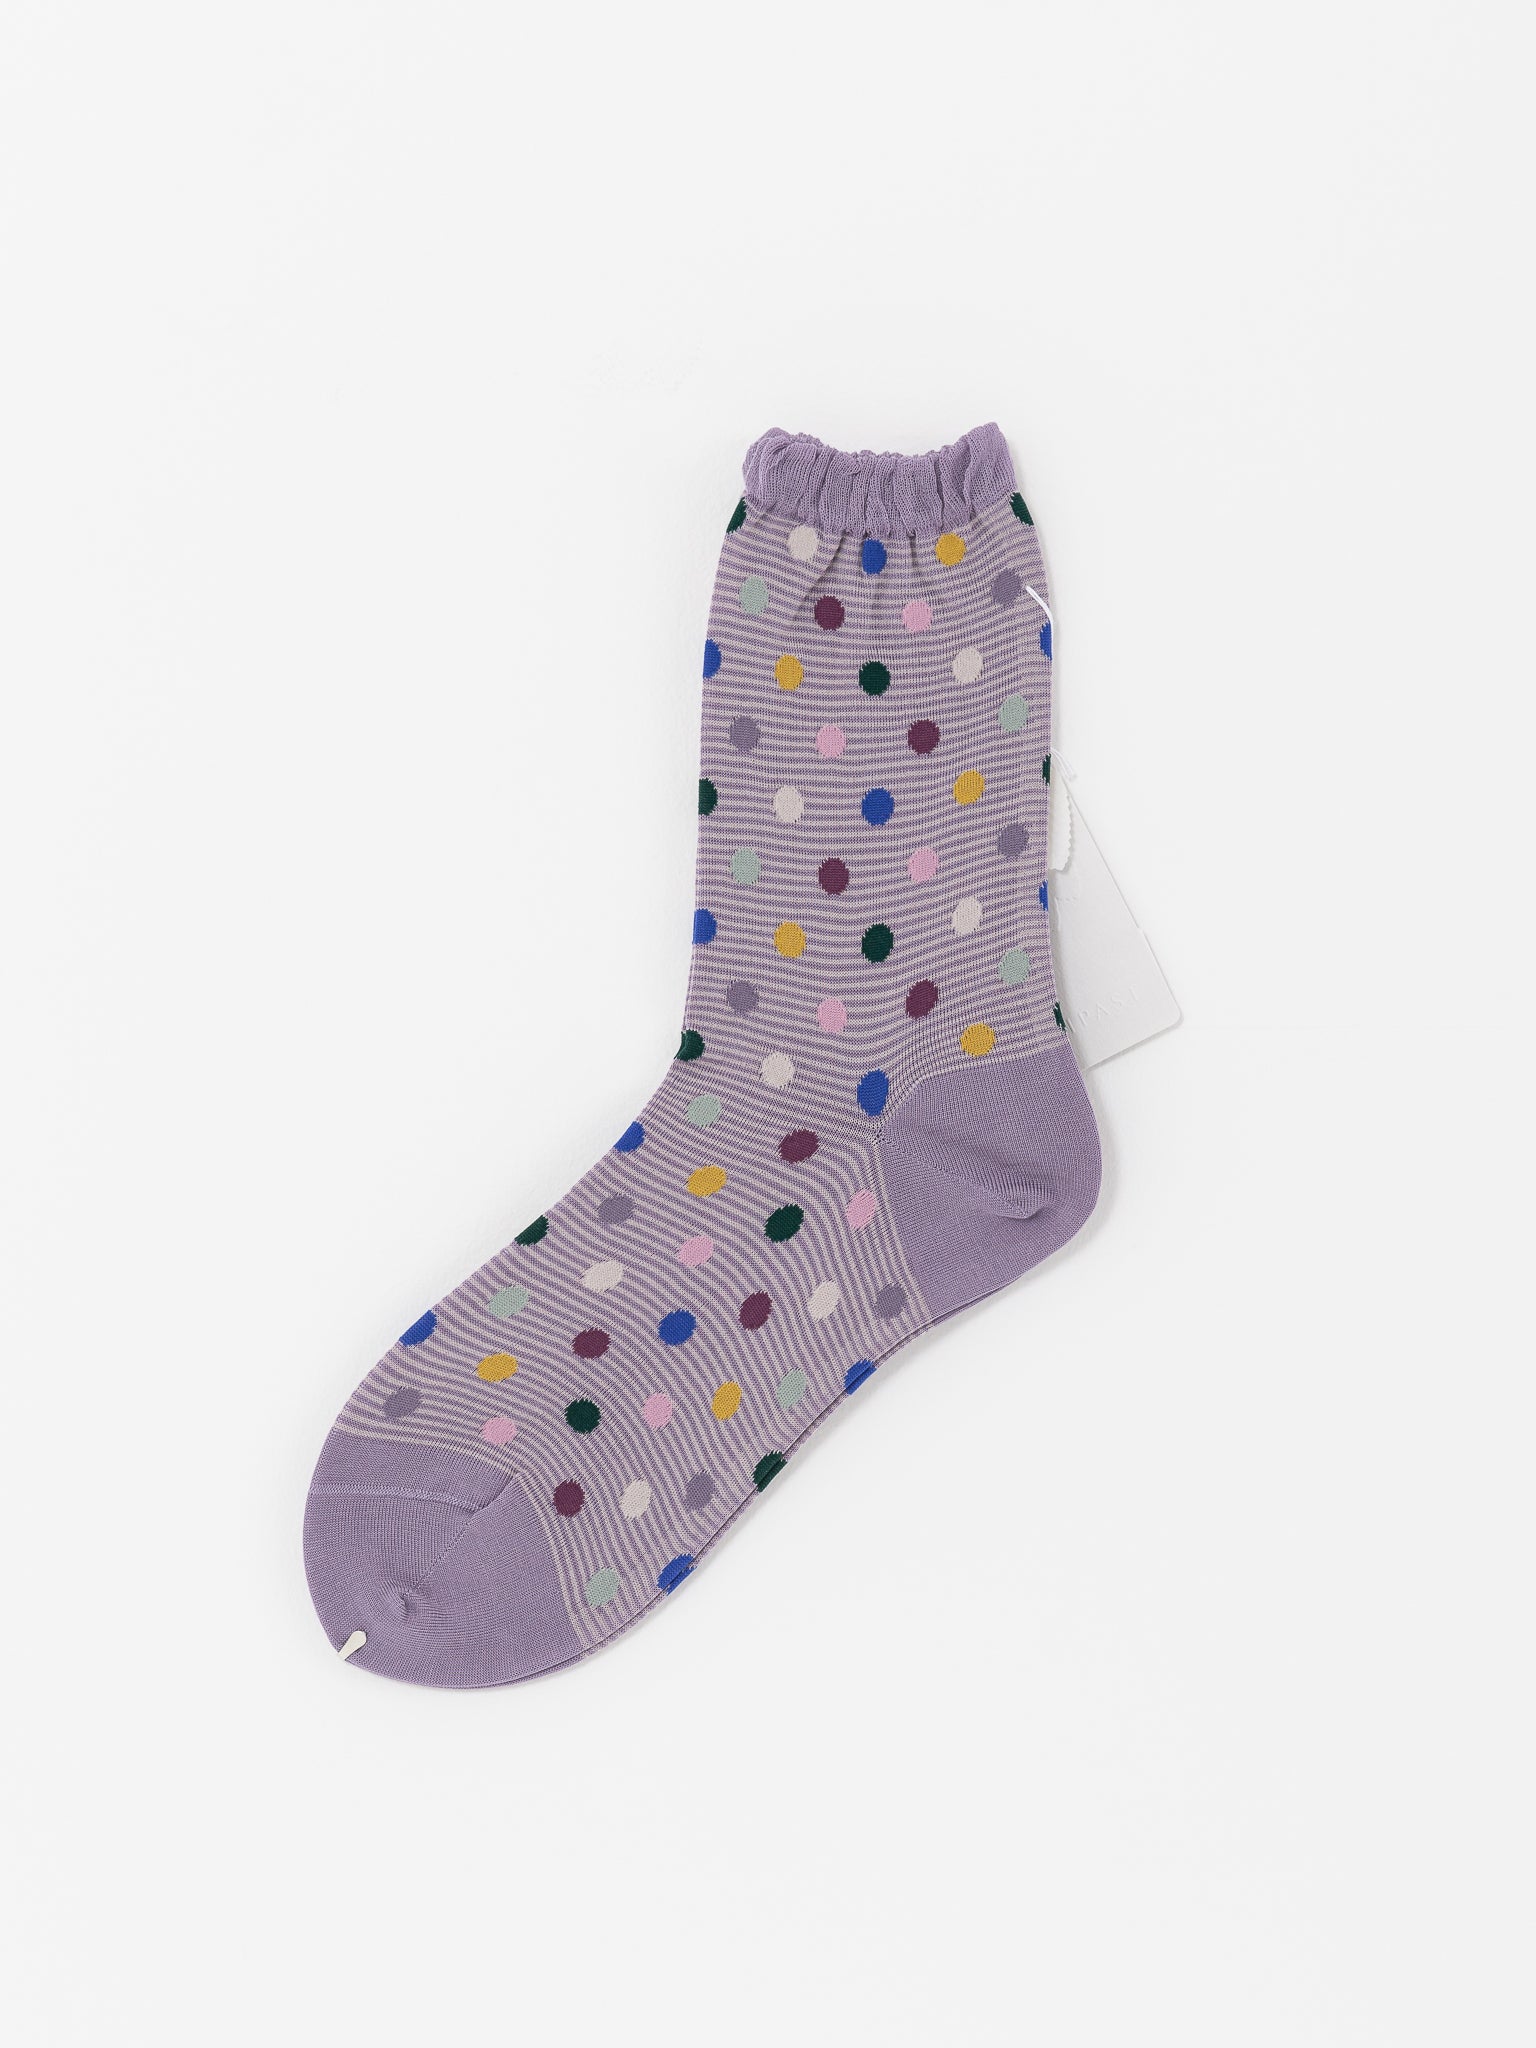 Antipast Candy Dot Socks, Lavender - Worthwhile